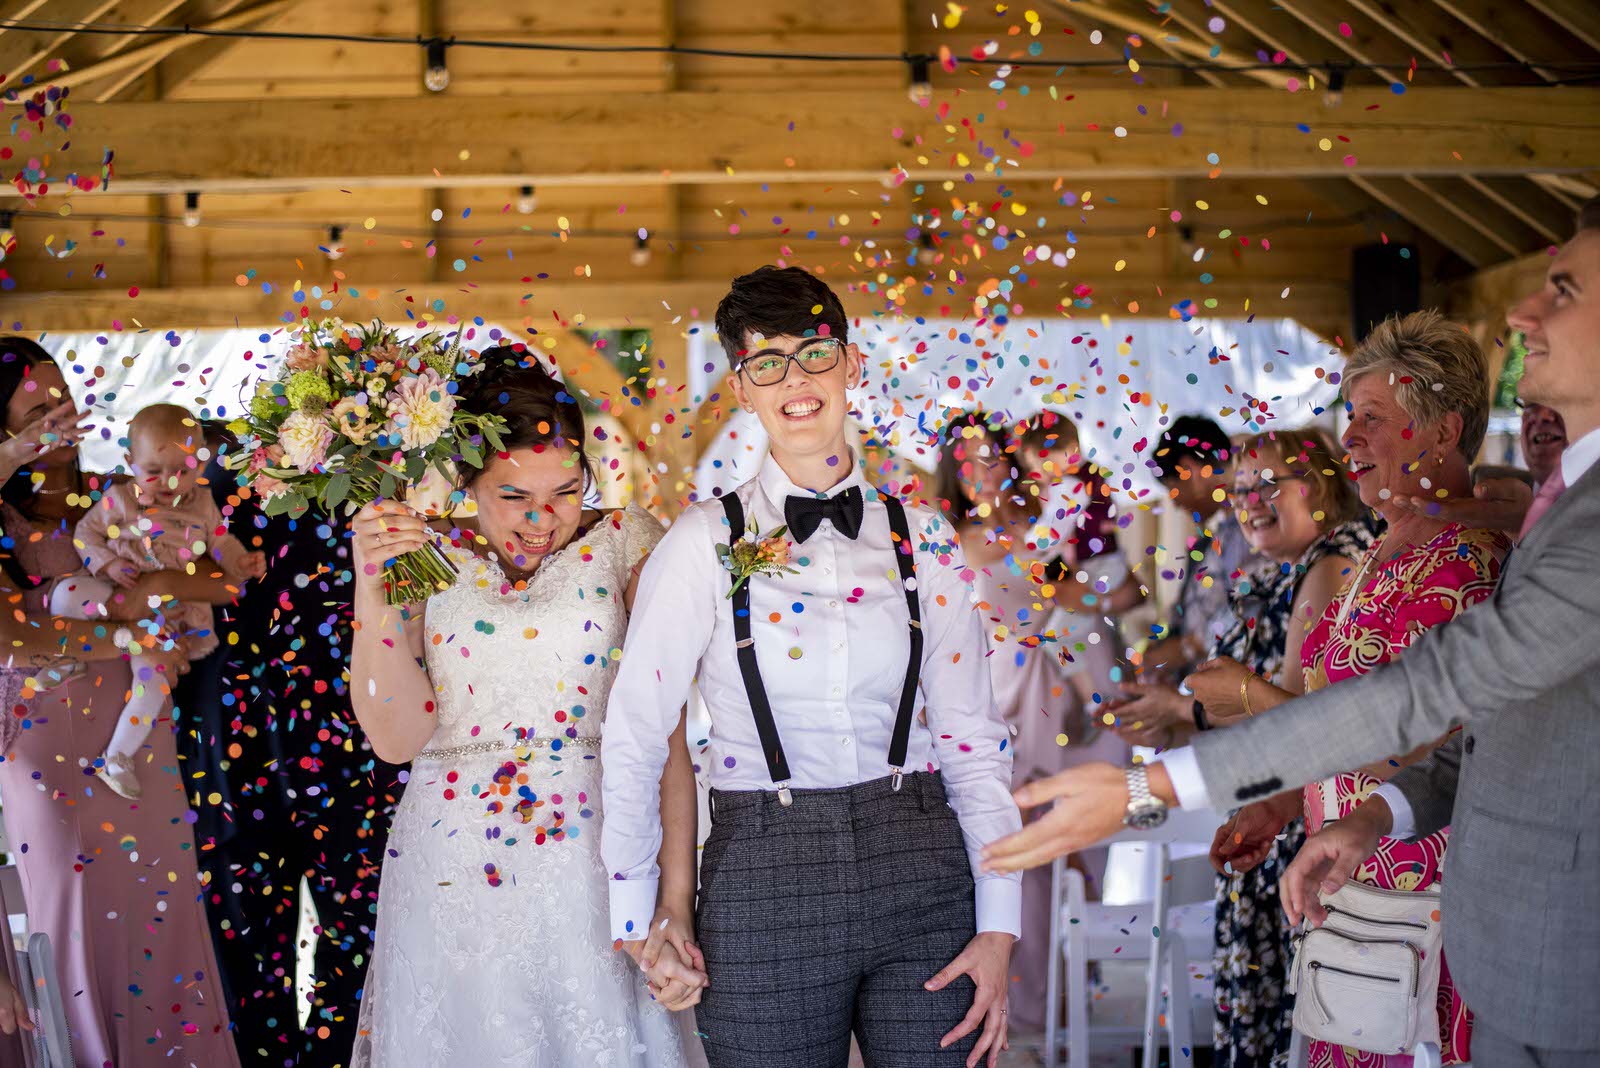 A wedding couple walking through confetti